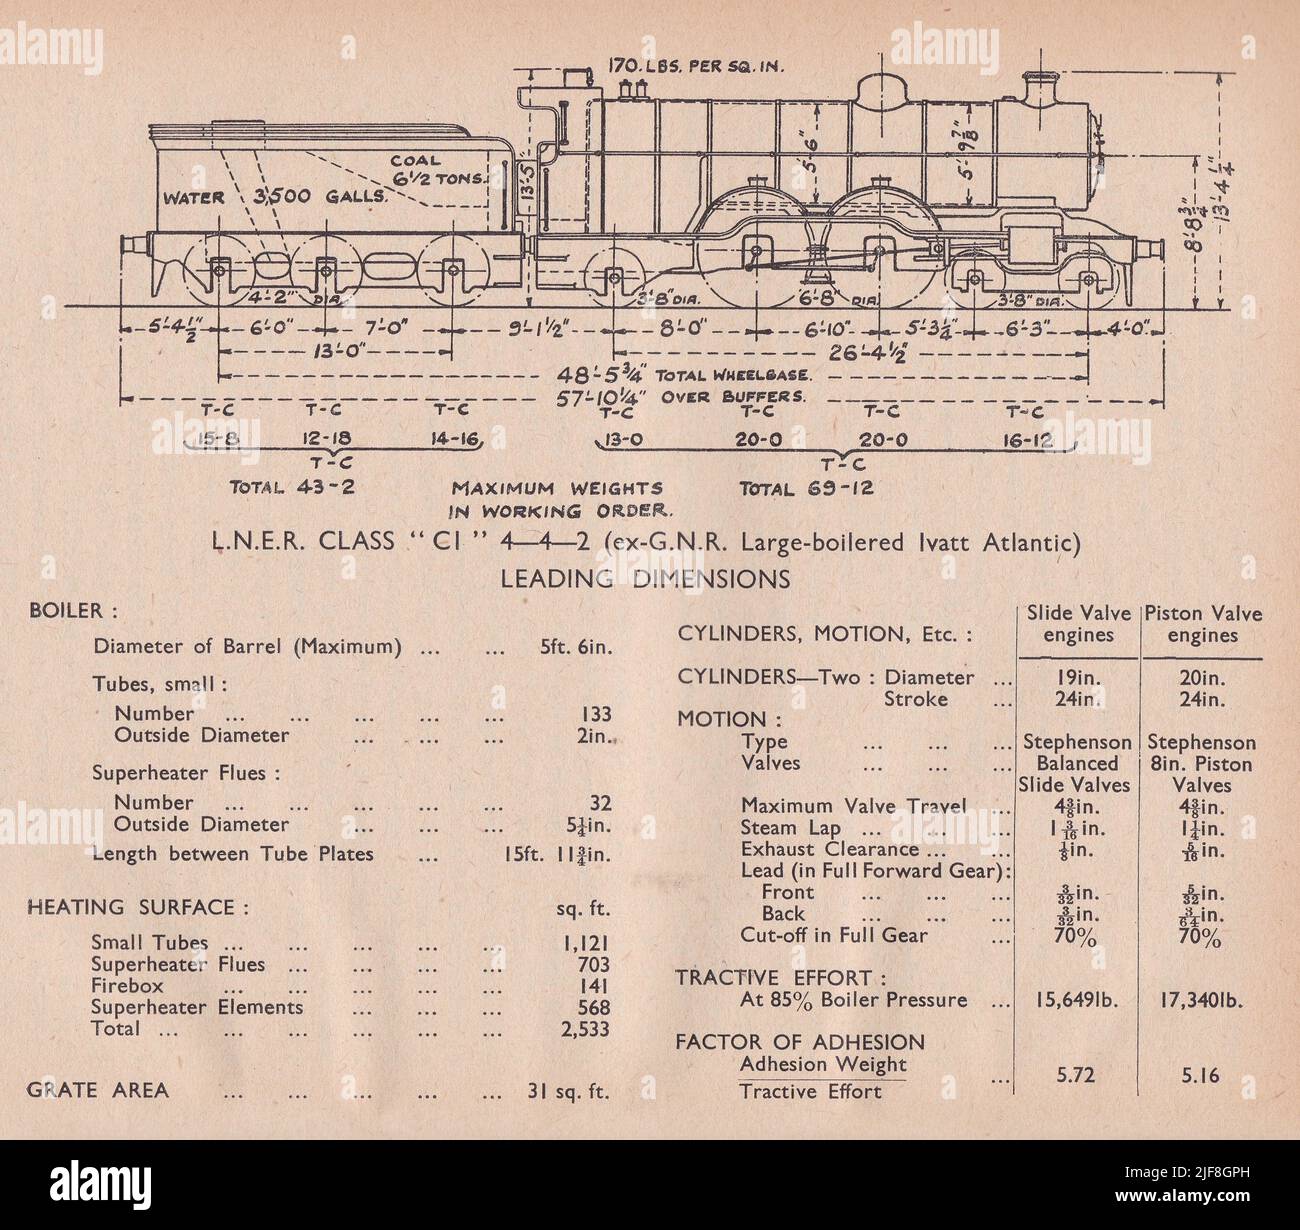 Vintage-Diagramm einer L.N.E.R. Klasse C1 4-4-2 (Ex G.N.R. Großkesseliger Ivatt Atlantic) führende Abmessungen. Stockfoto